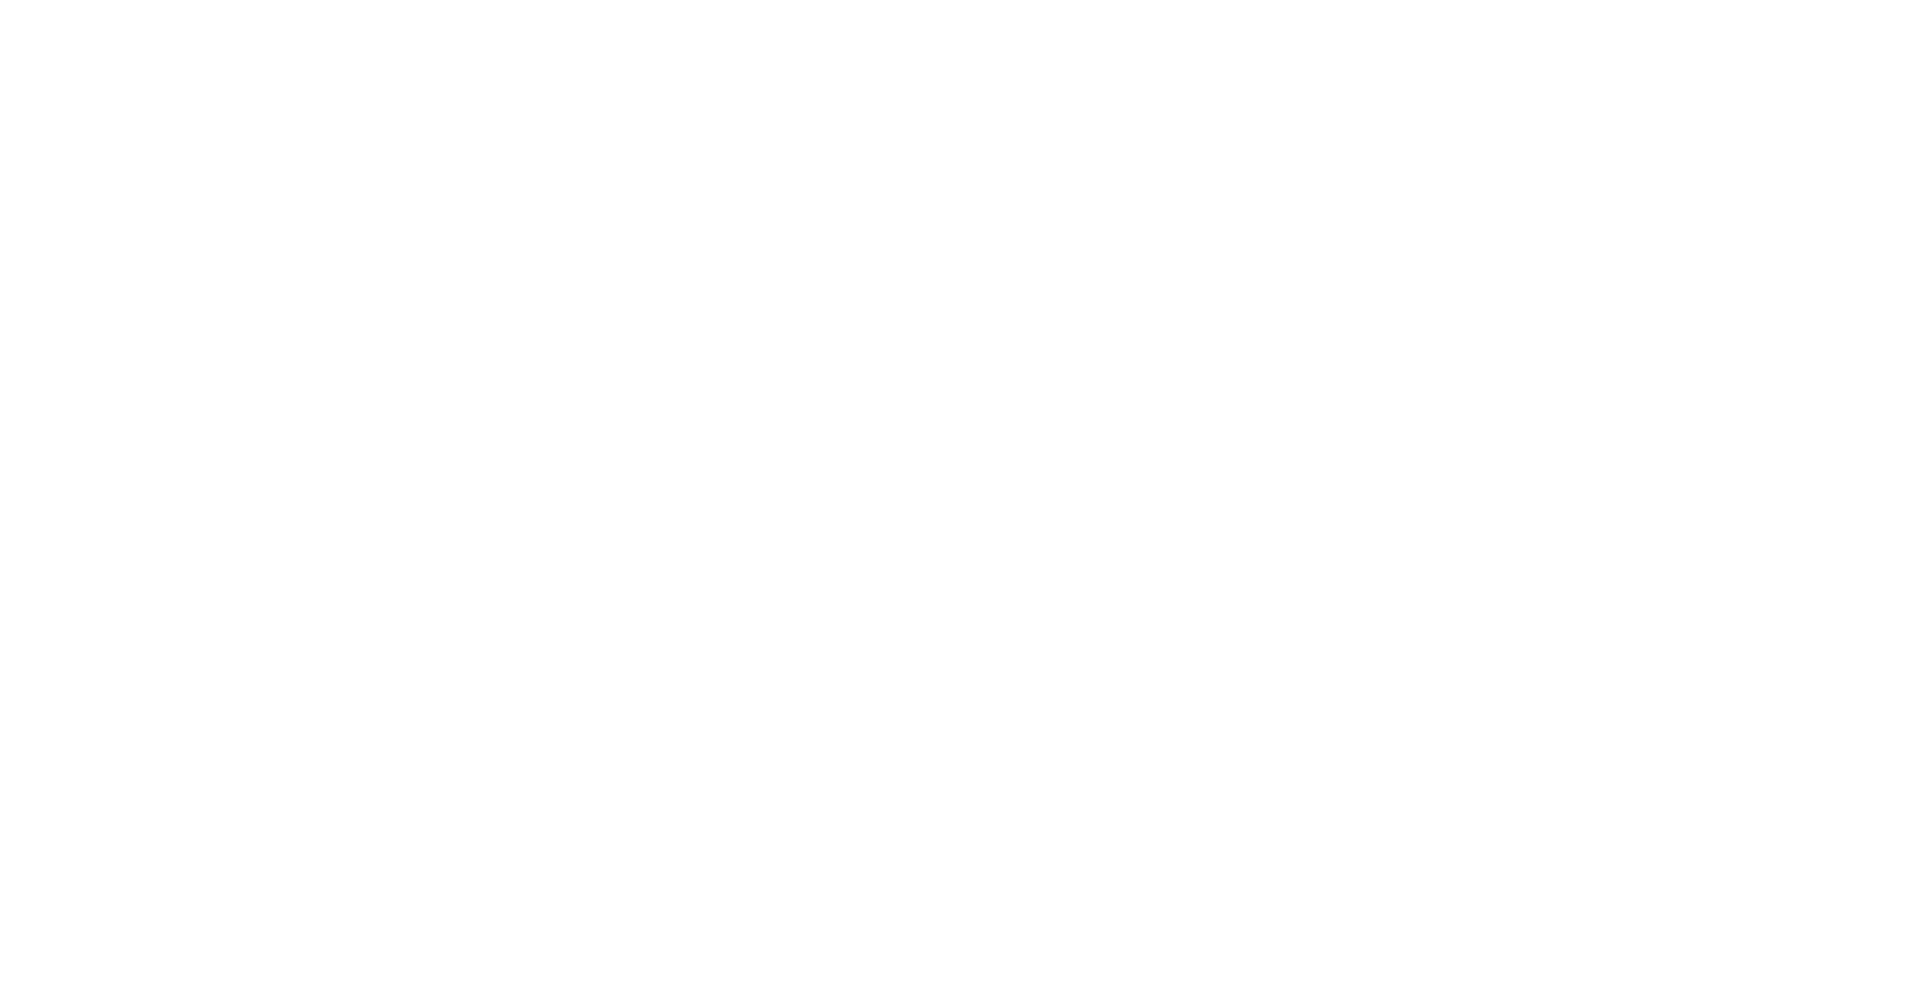 Mississippi Logo - Press Room Visit Mississippi